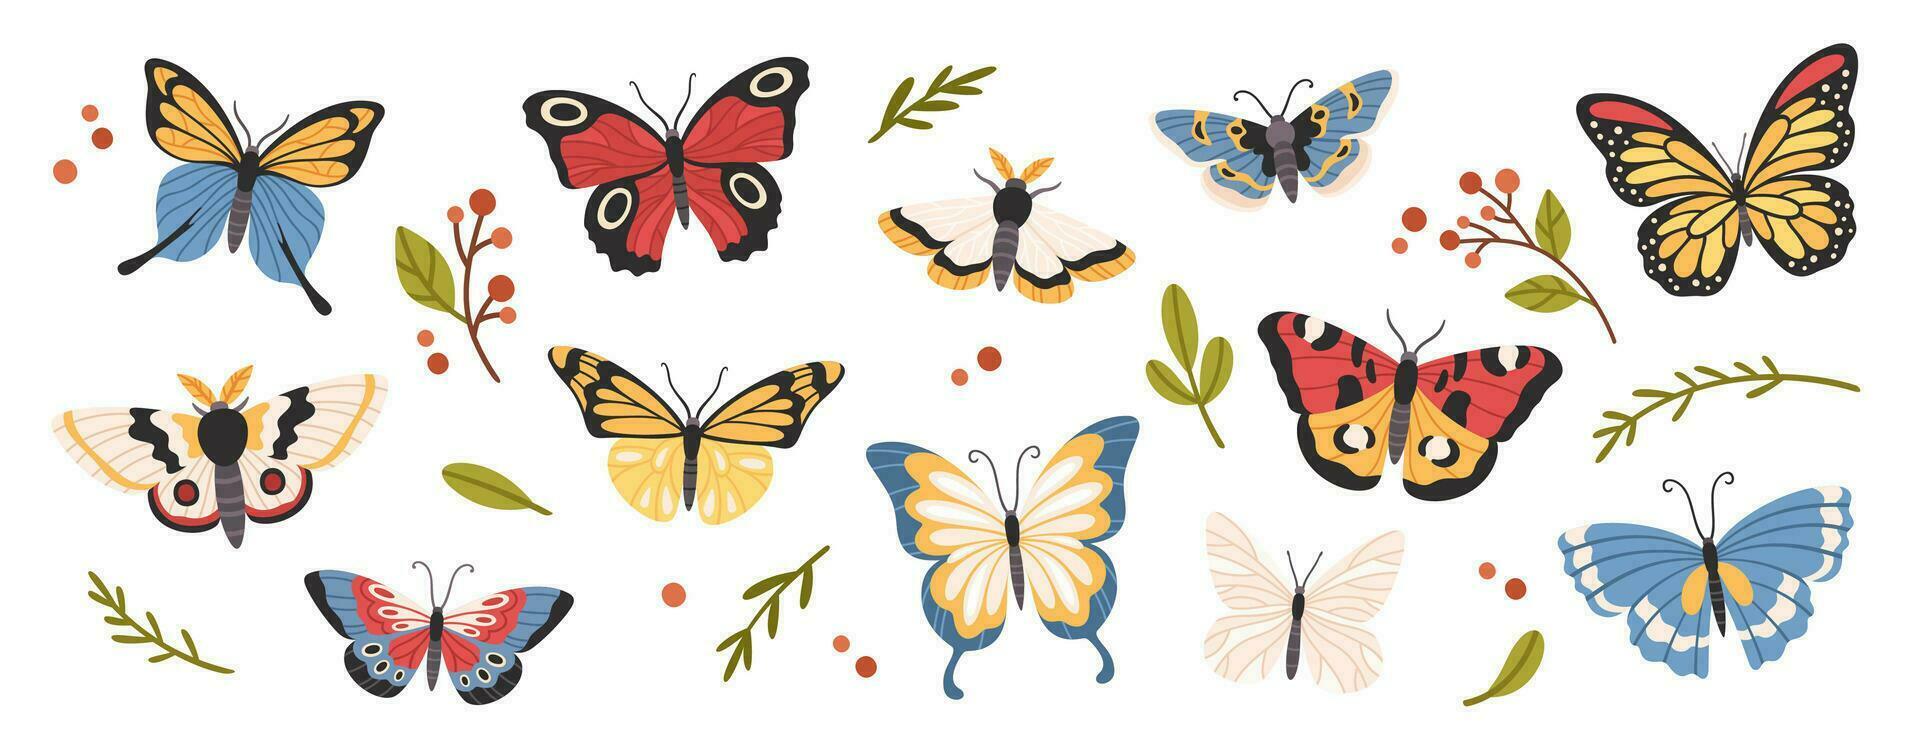 dibujos animados mariposas linda primavera insectos con vistoso alas, volador mariposa. con alas insecto, hermosa polilla fauna decorativo elementos. papillons vector conjunto